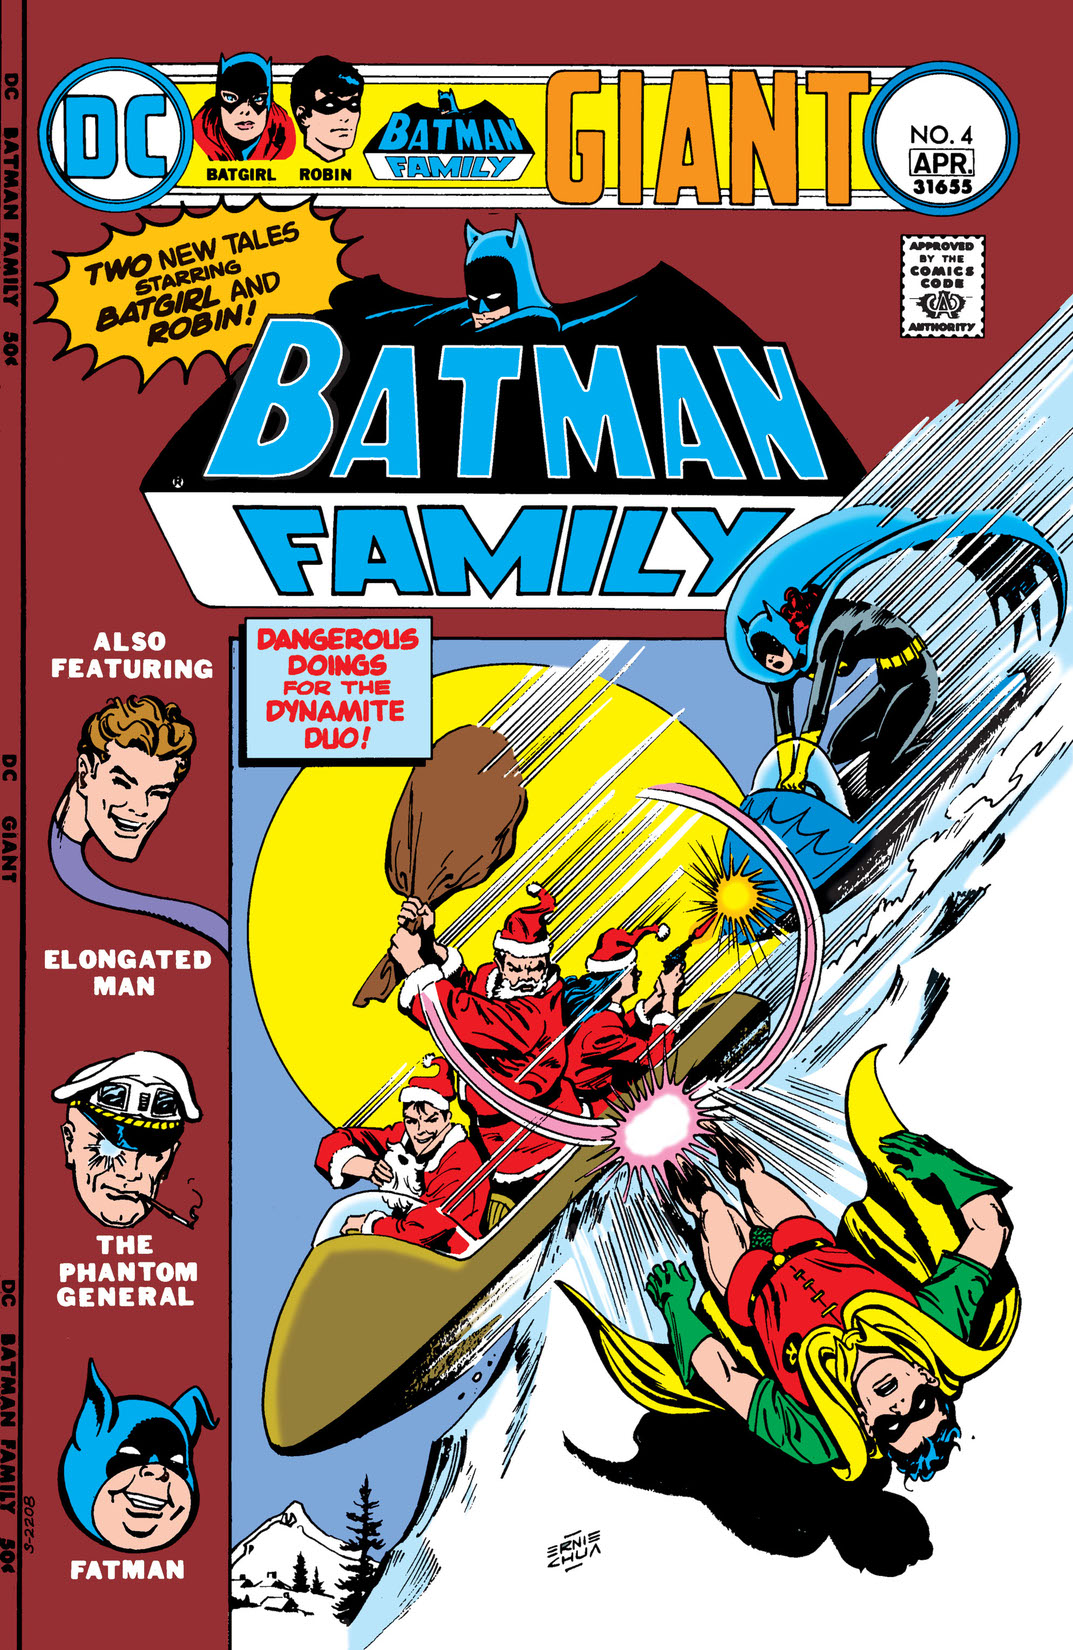 Batman Family #4 preview images